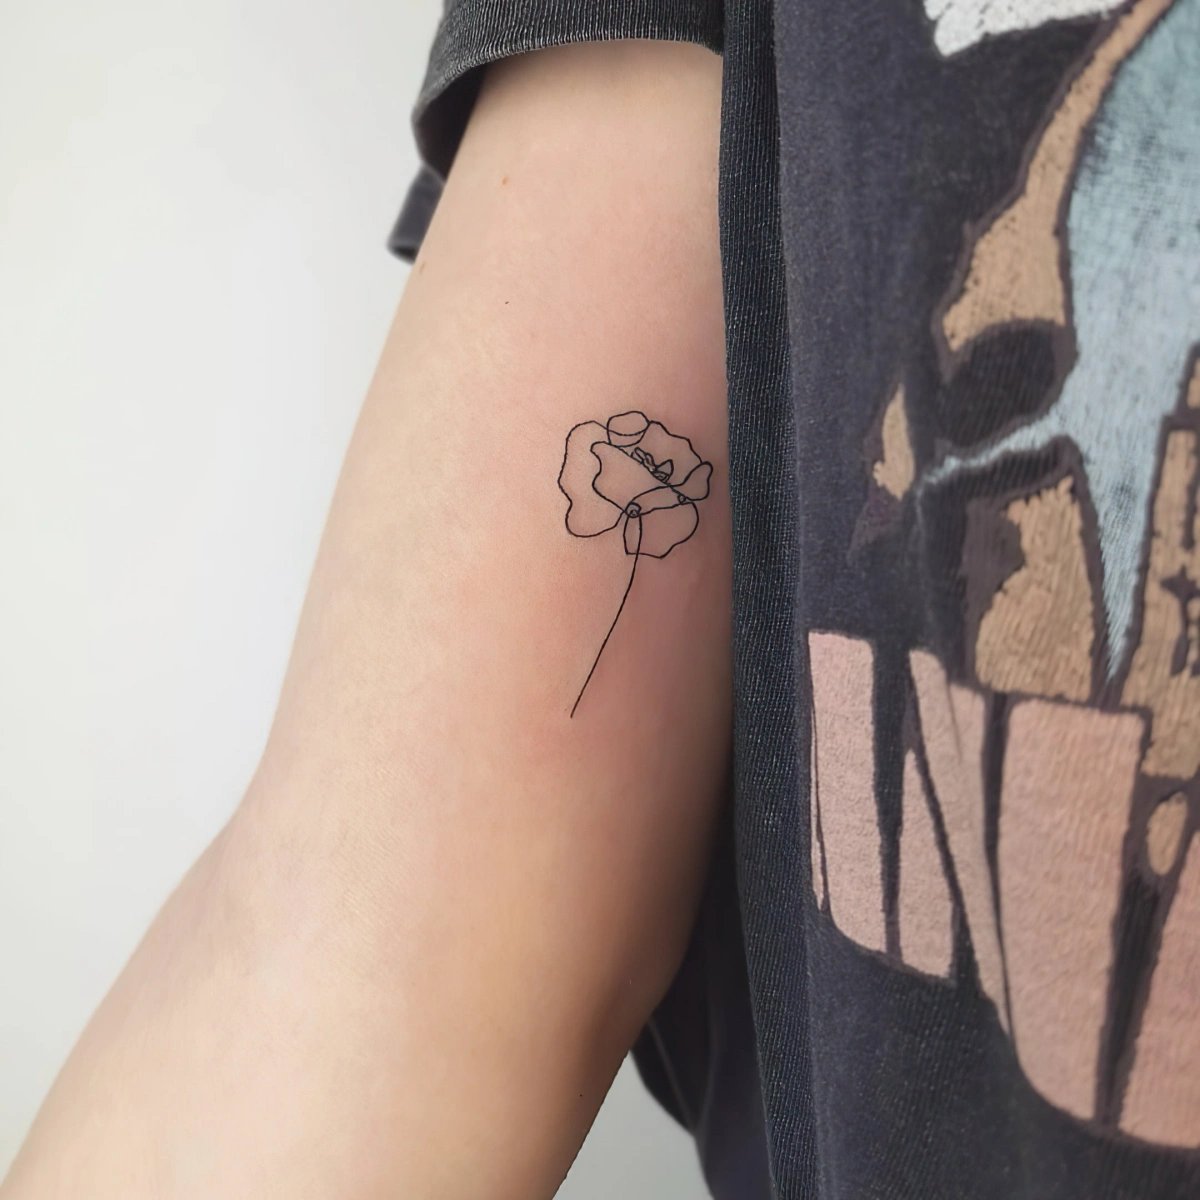 petit dessin lignes fines tattoo minimaliste fleur sur bras